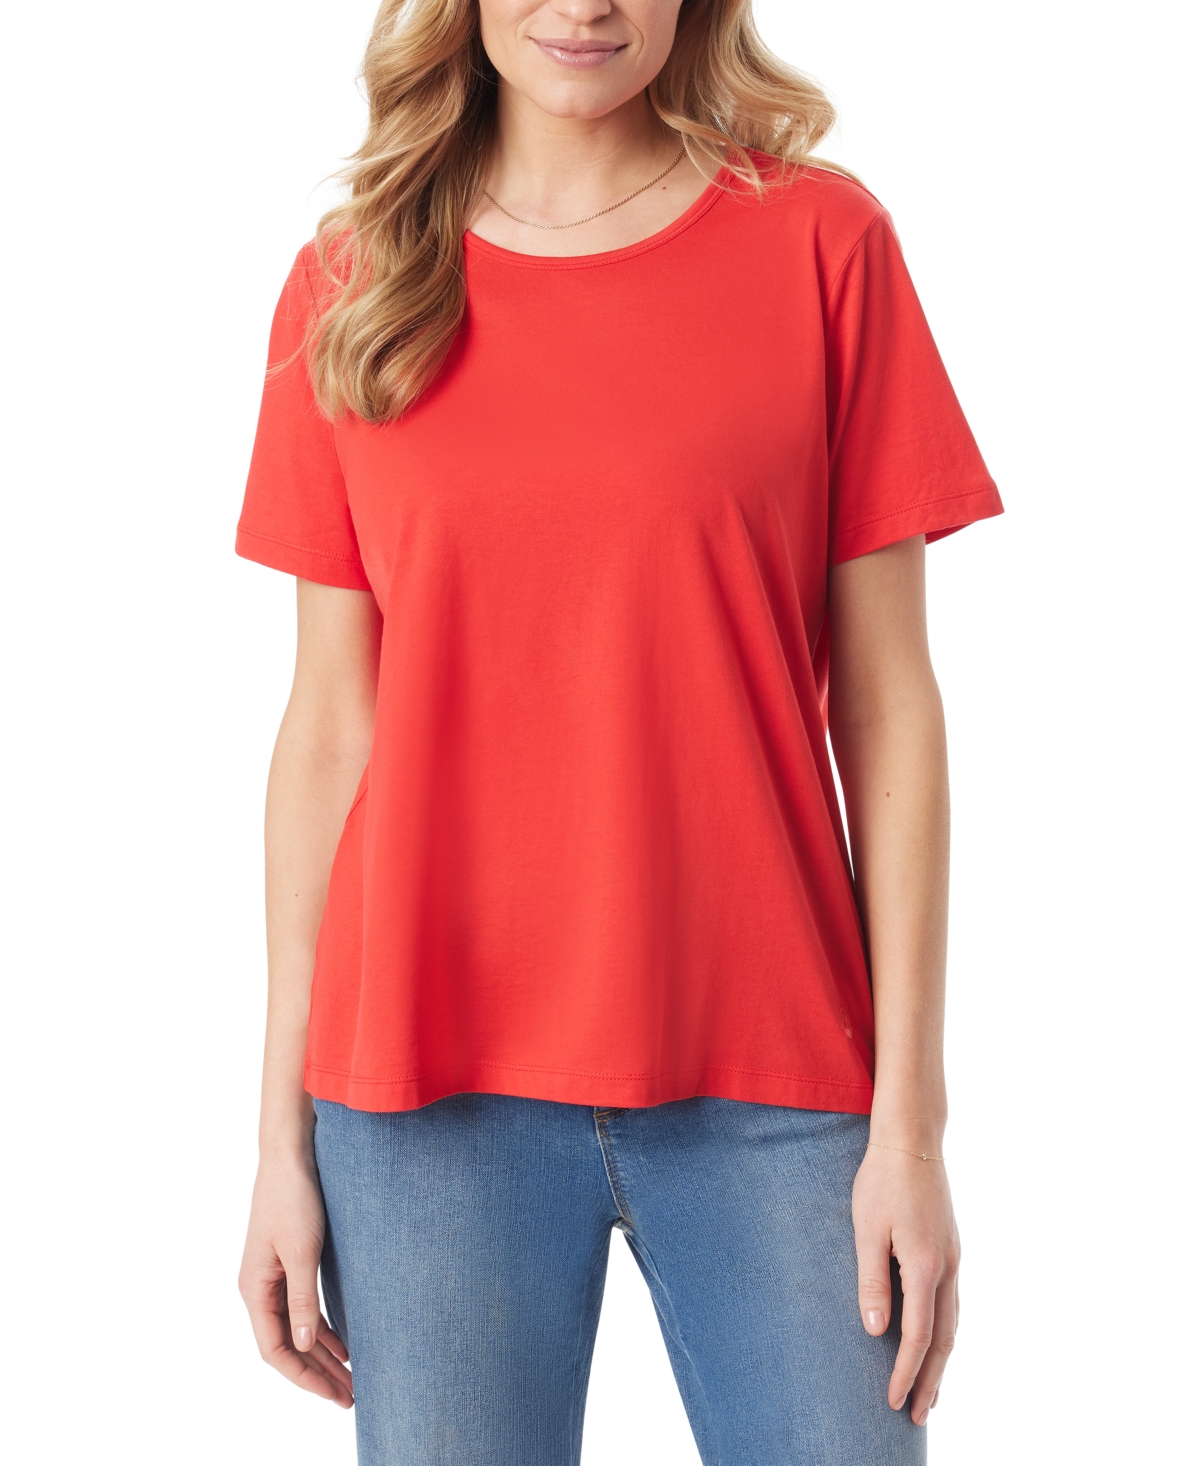 Women's Amanda Crewneck T-Shirt - Red Poppy